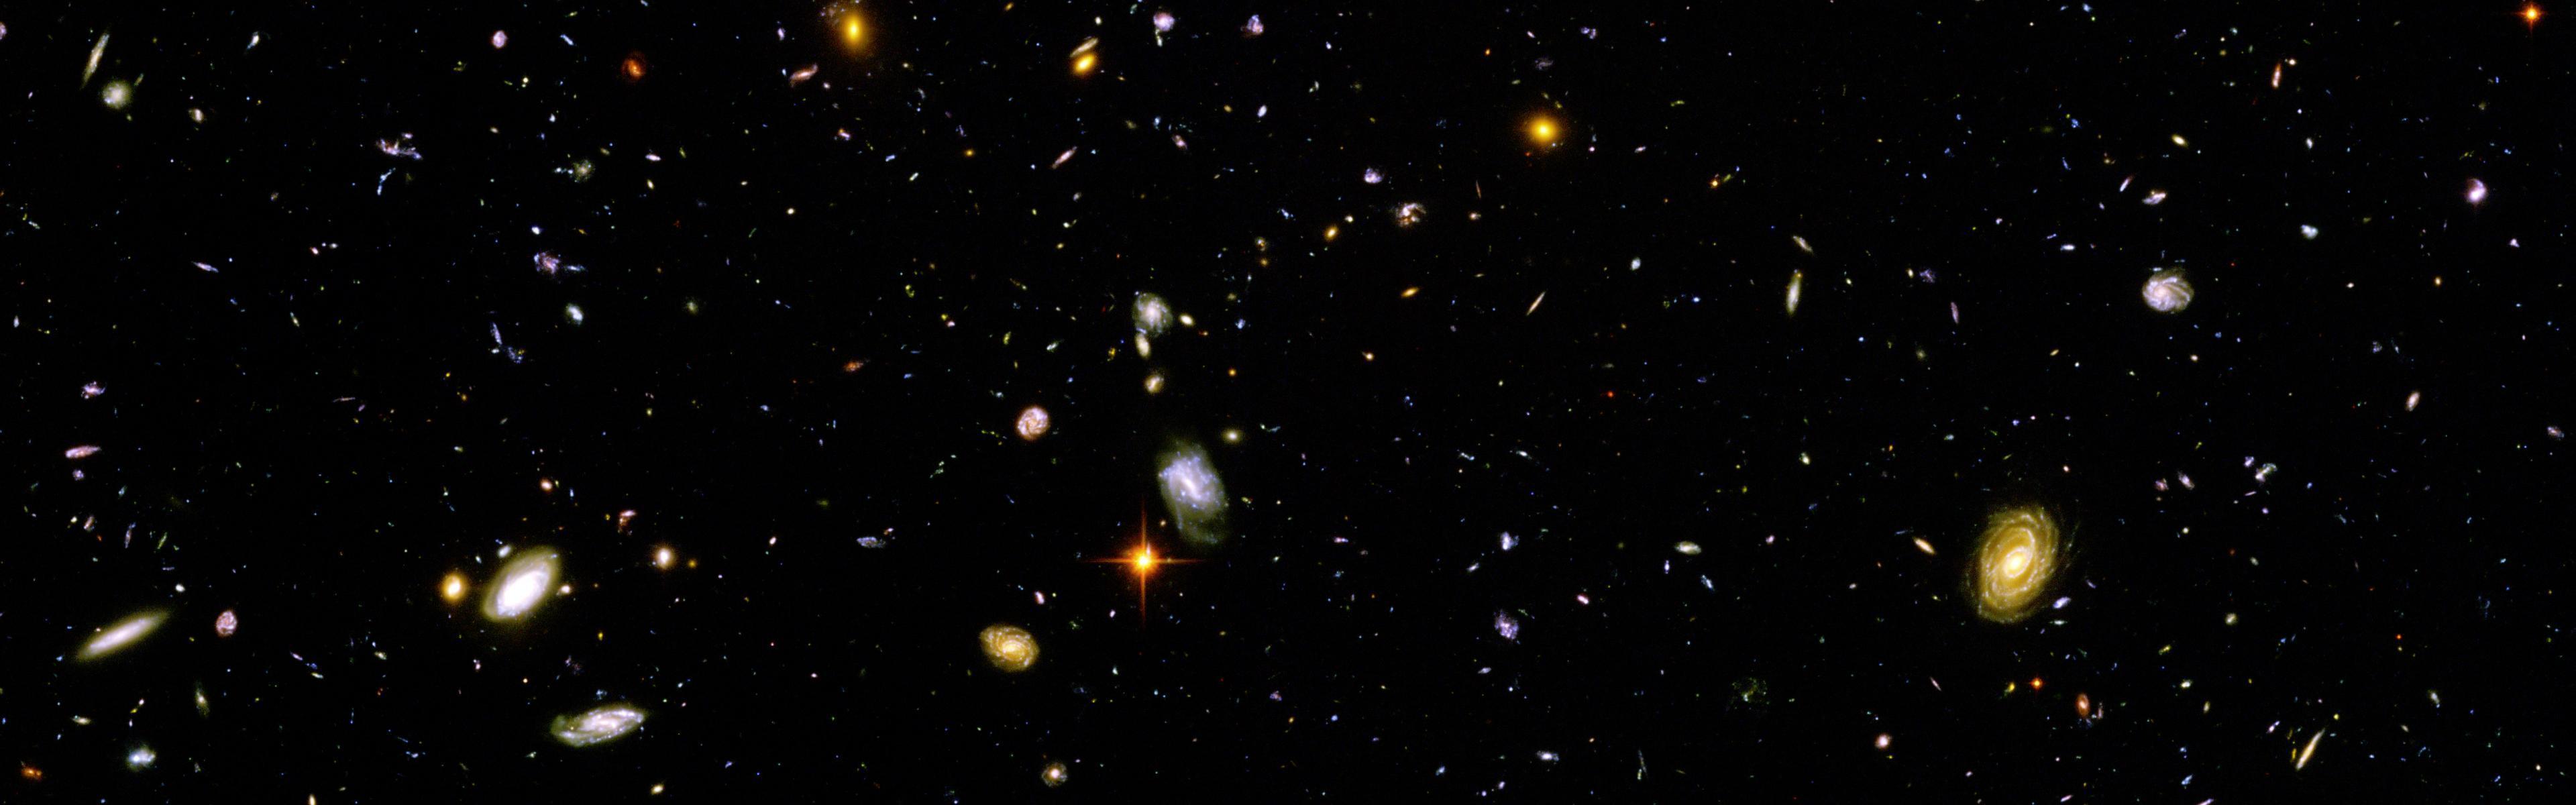 Hubble Ultra Deep Field HD Picture 3 Download